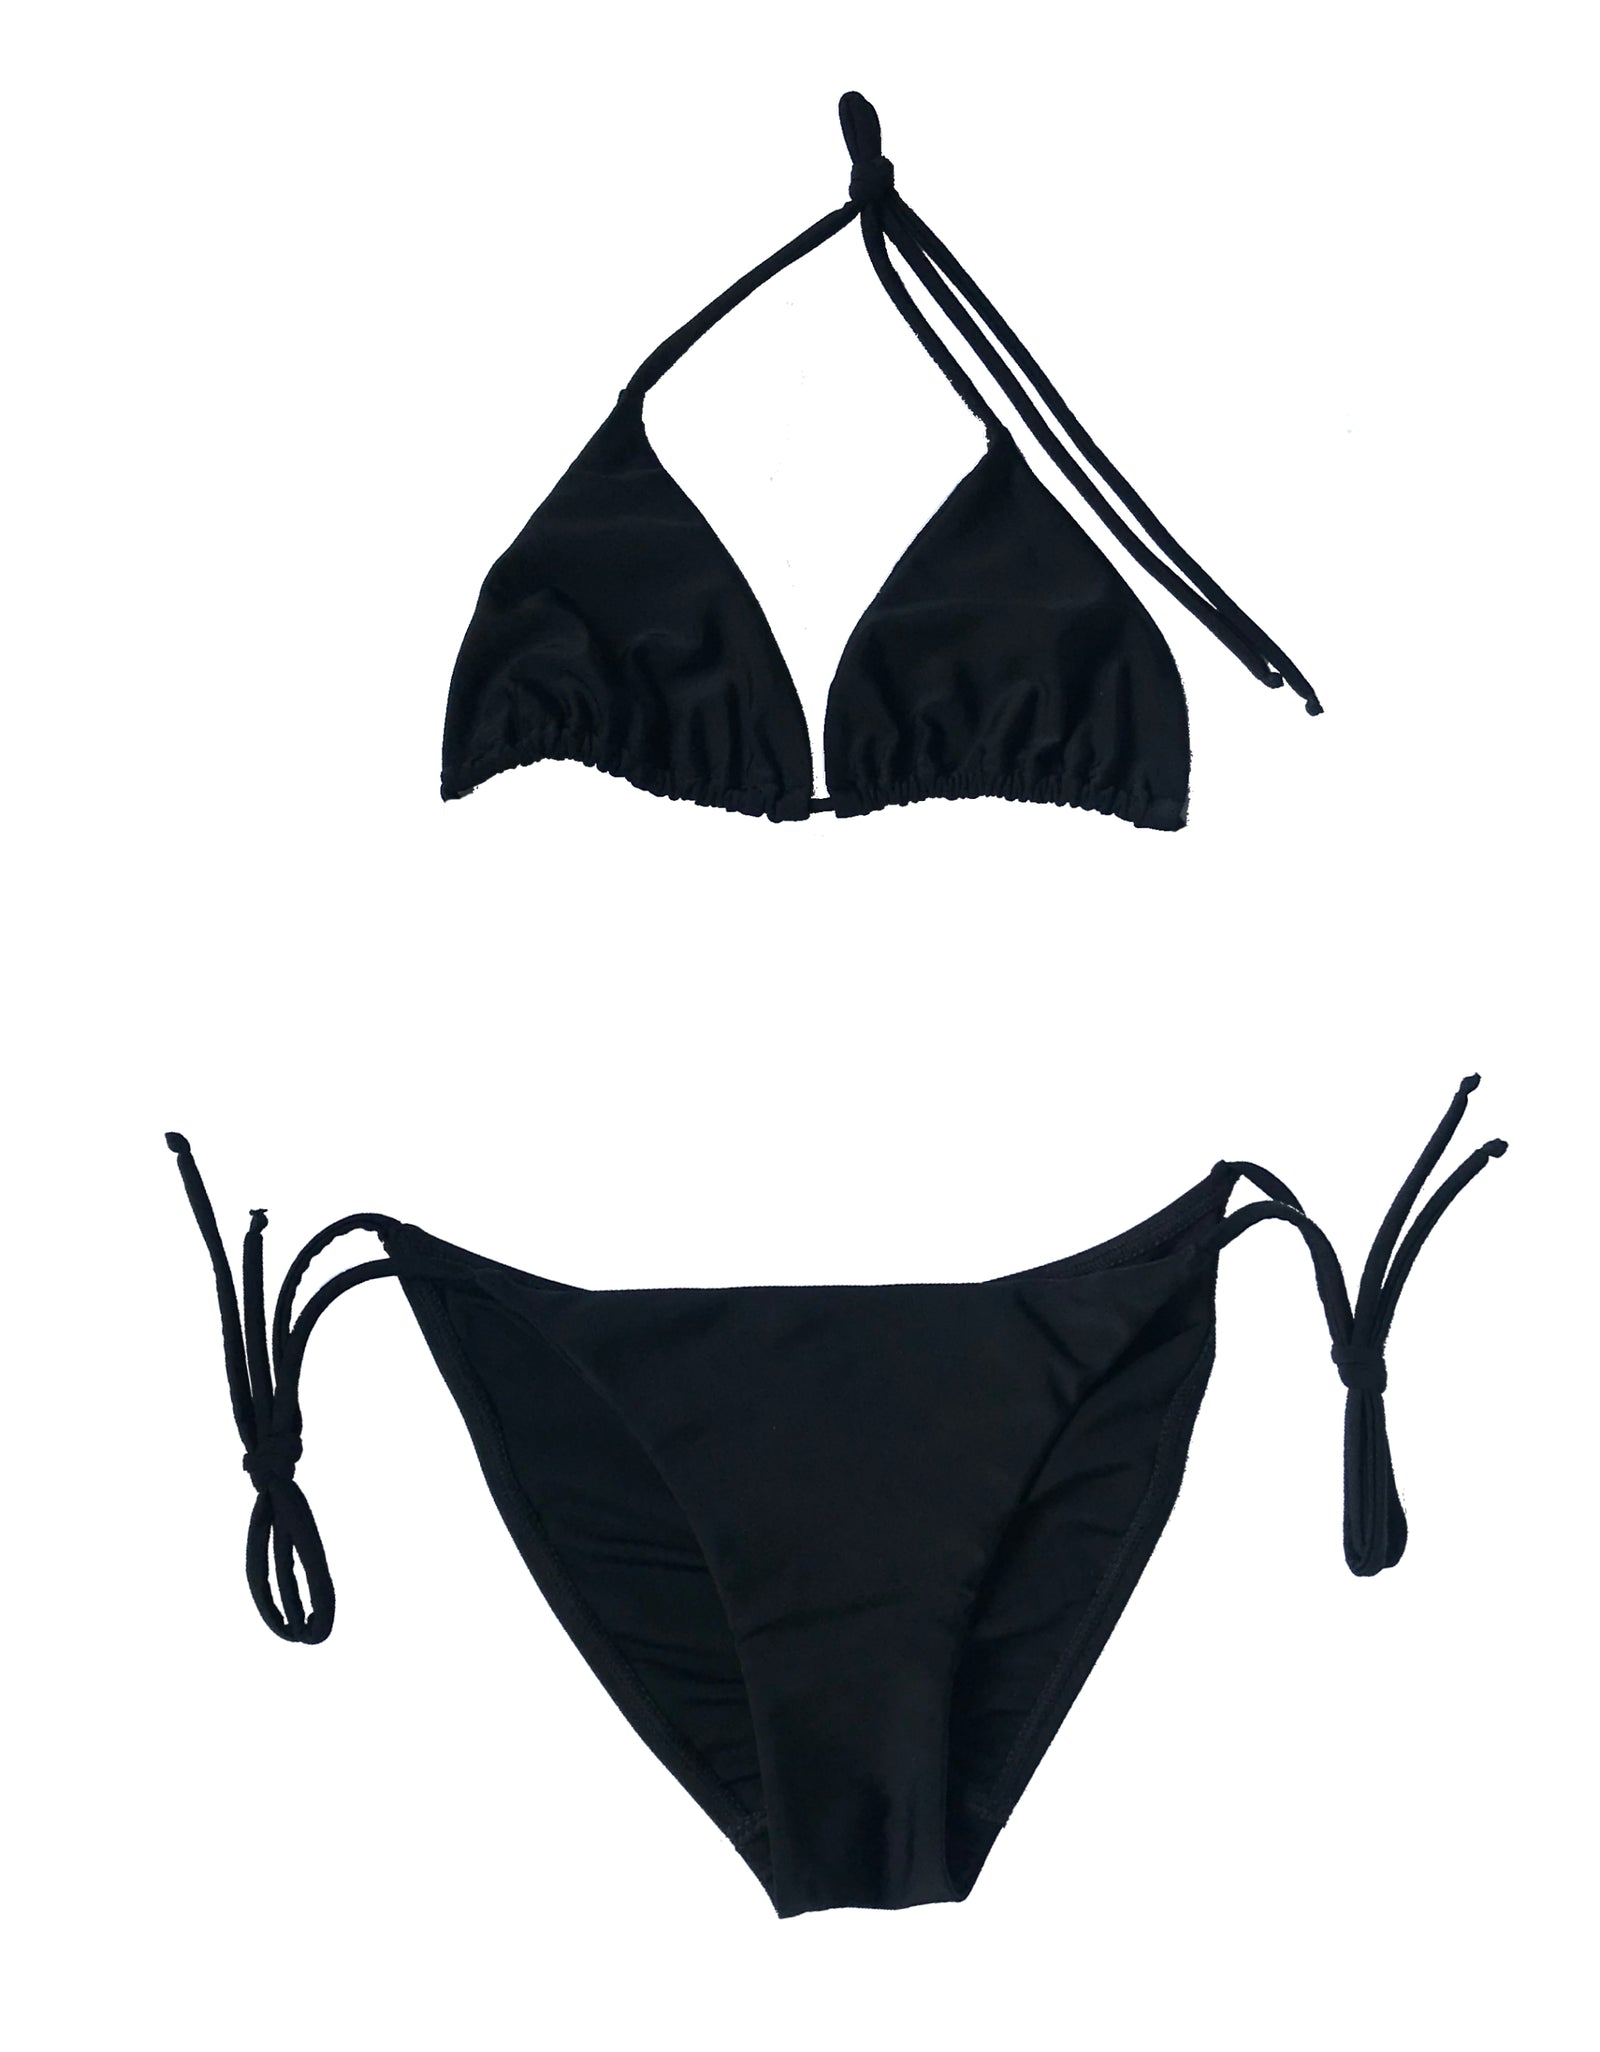 LLYLA Black String Bikini Set - Halterneck triangle bra with